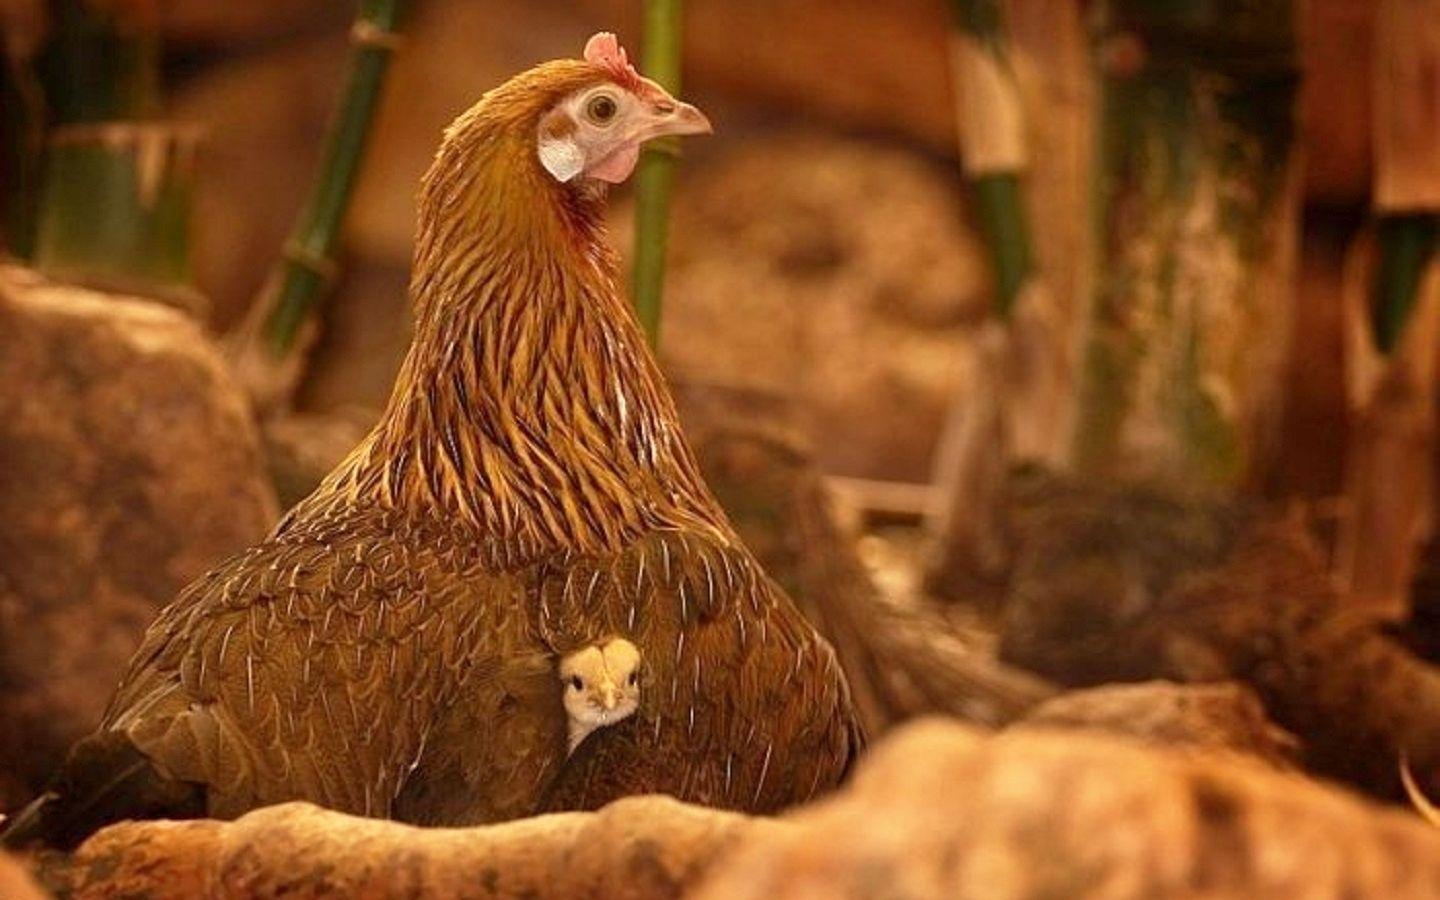 Chicken hello world mother newafe animals. I HD WALL FREE